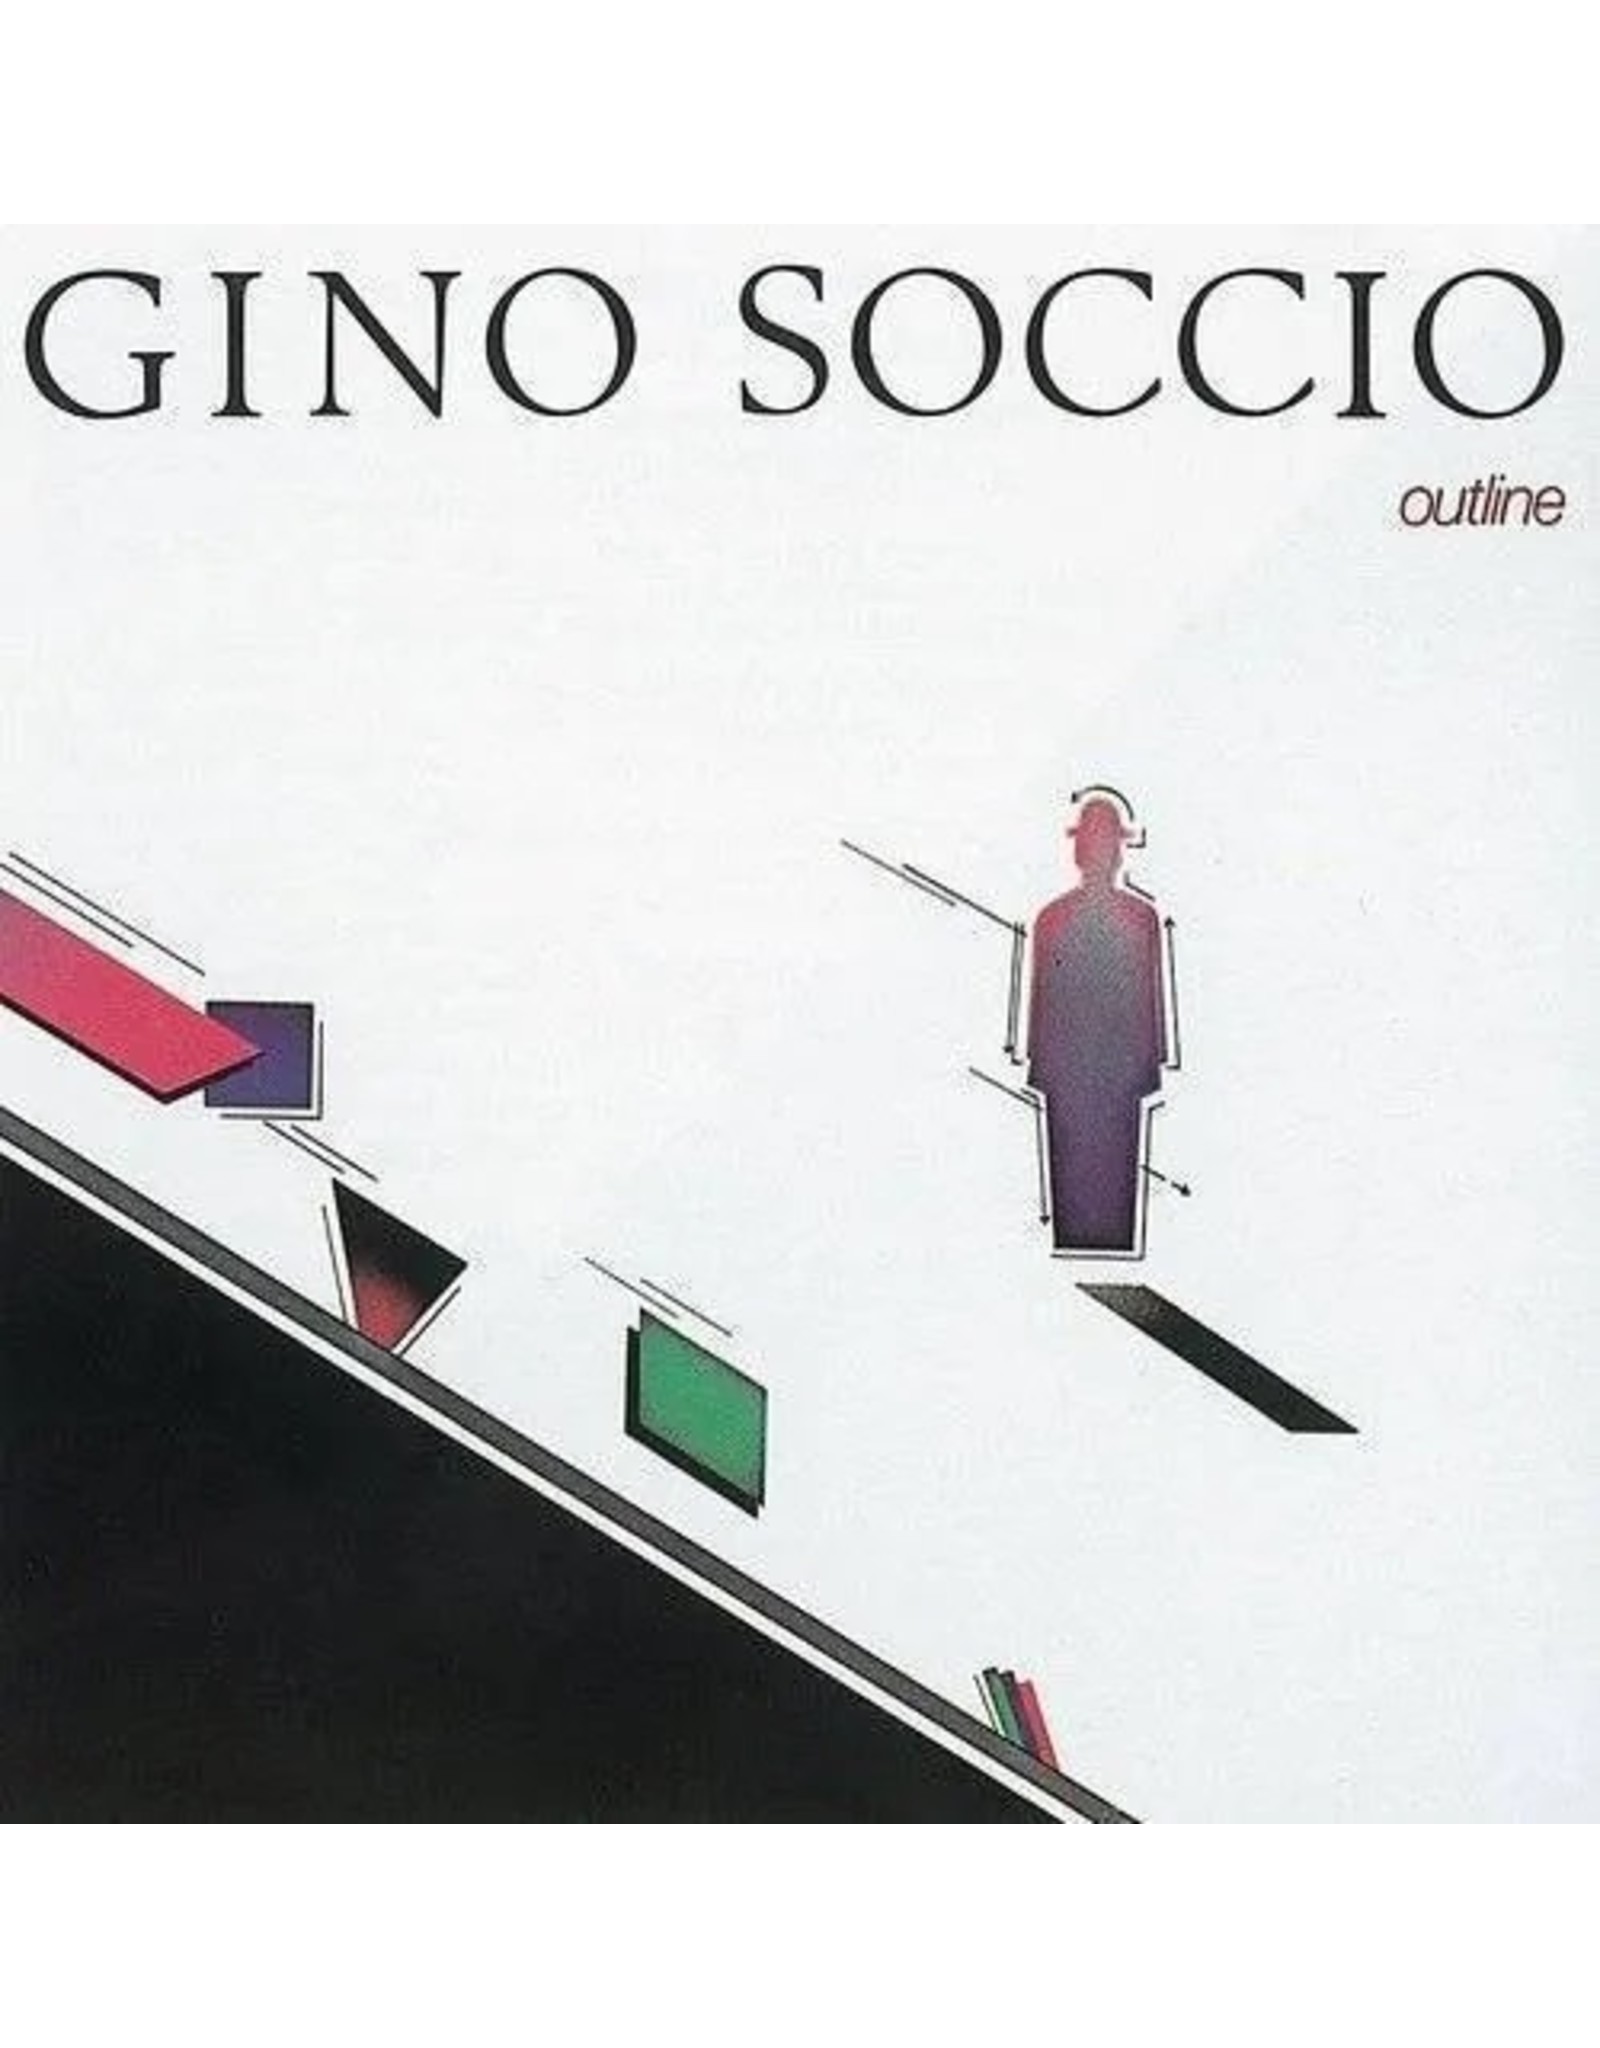 Gino Soccio - Outline (Exclusive Purple Vinyl)